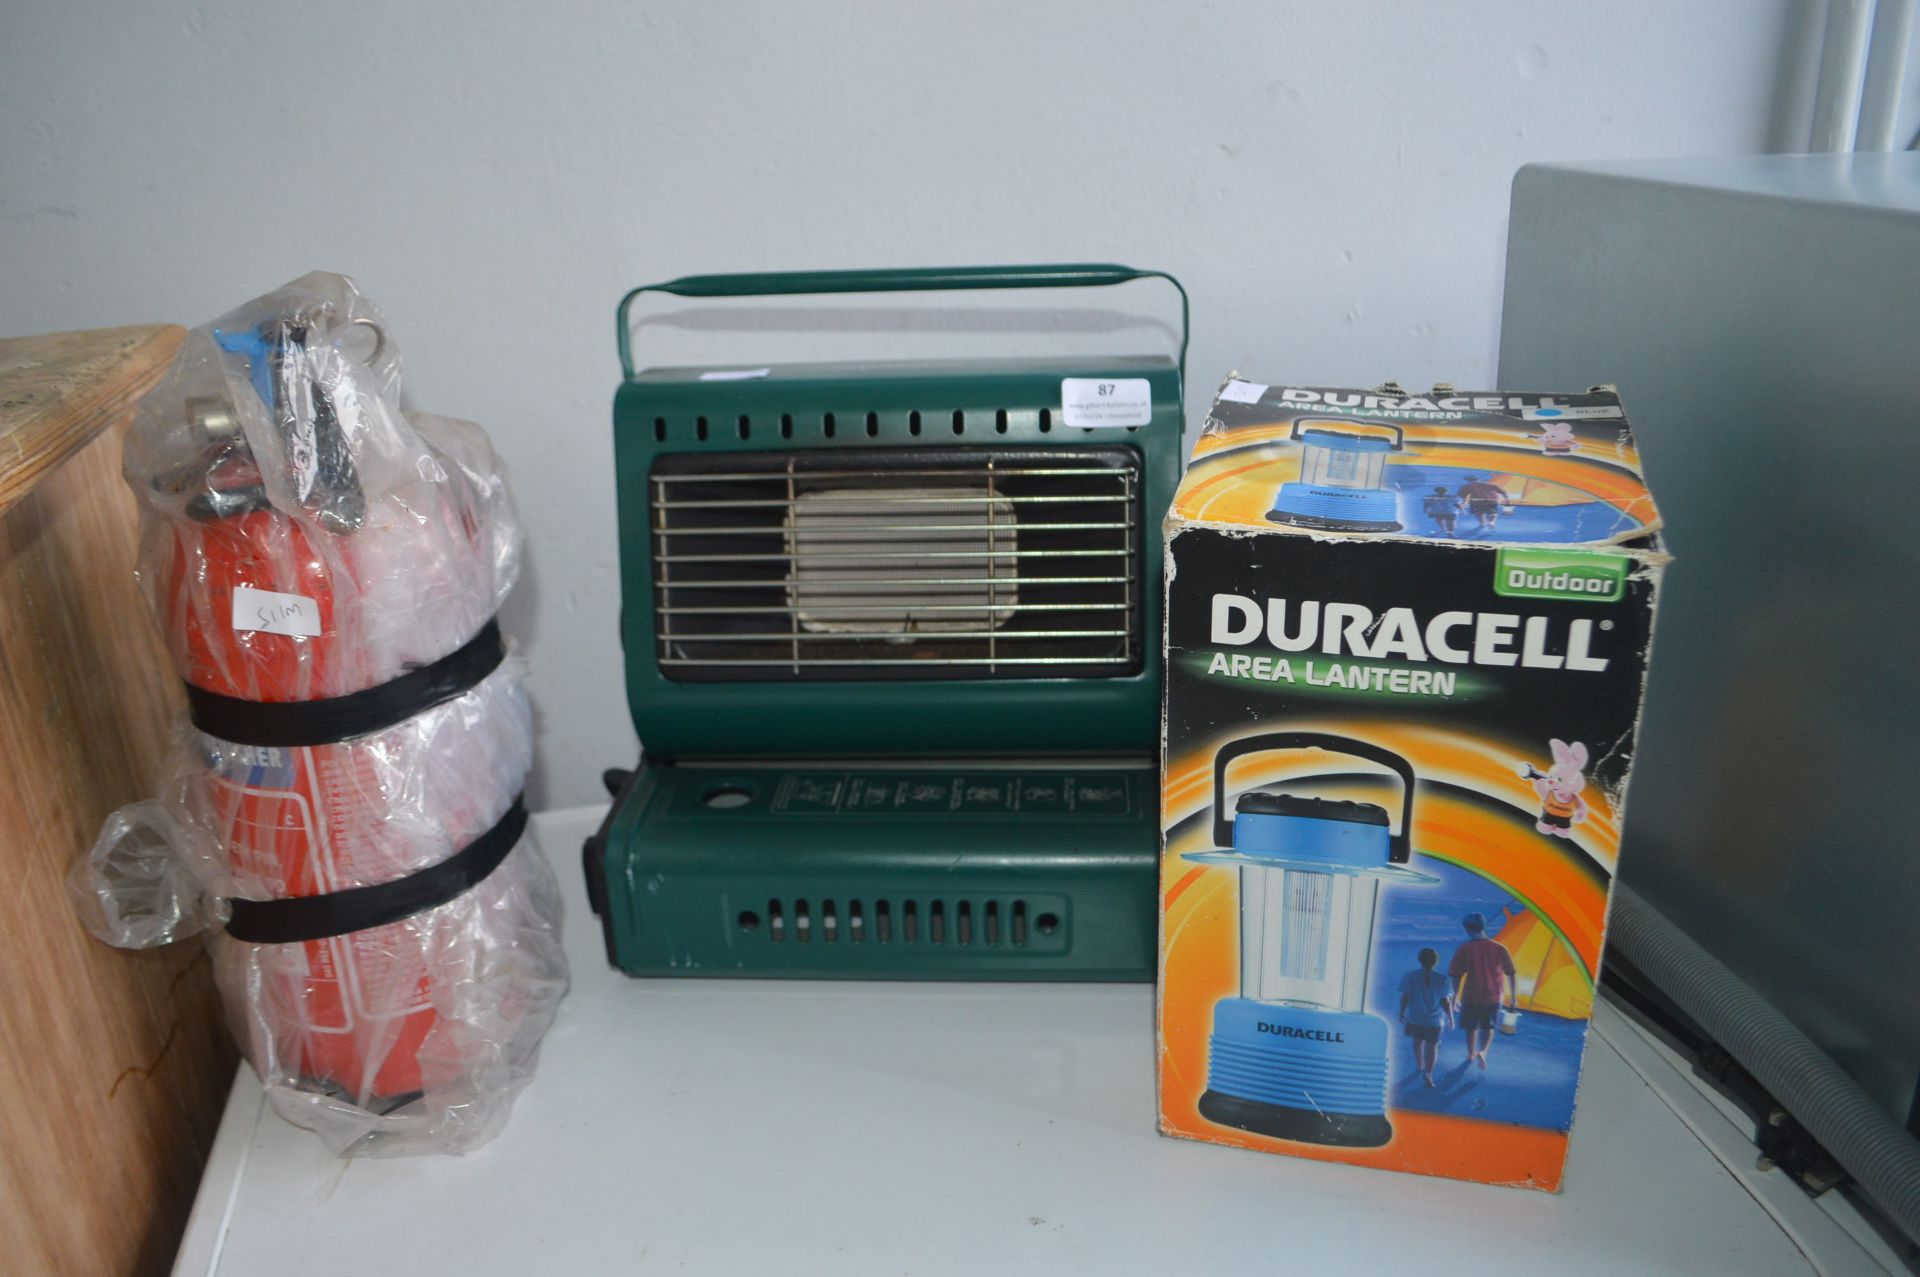 Wynnstr Portable Gas Heater, Duracell Lantern, and